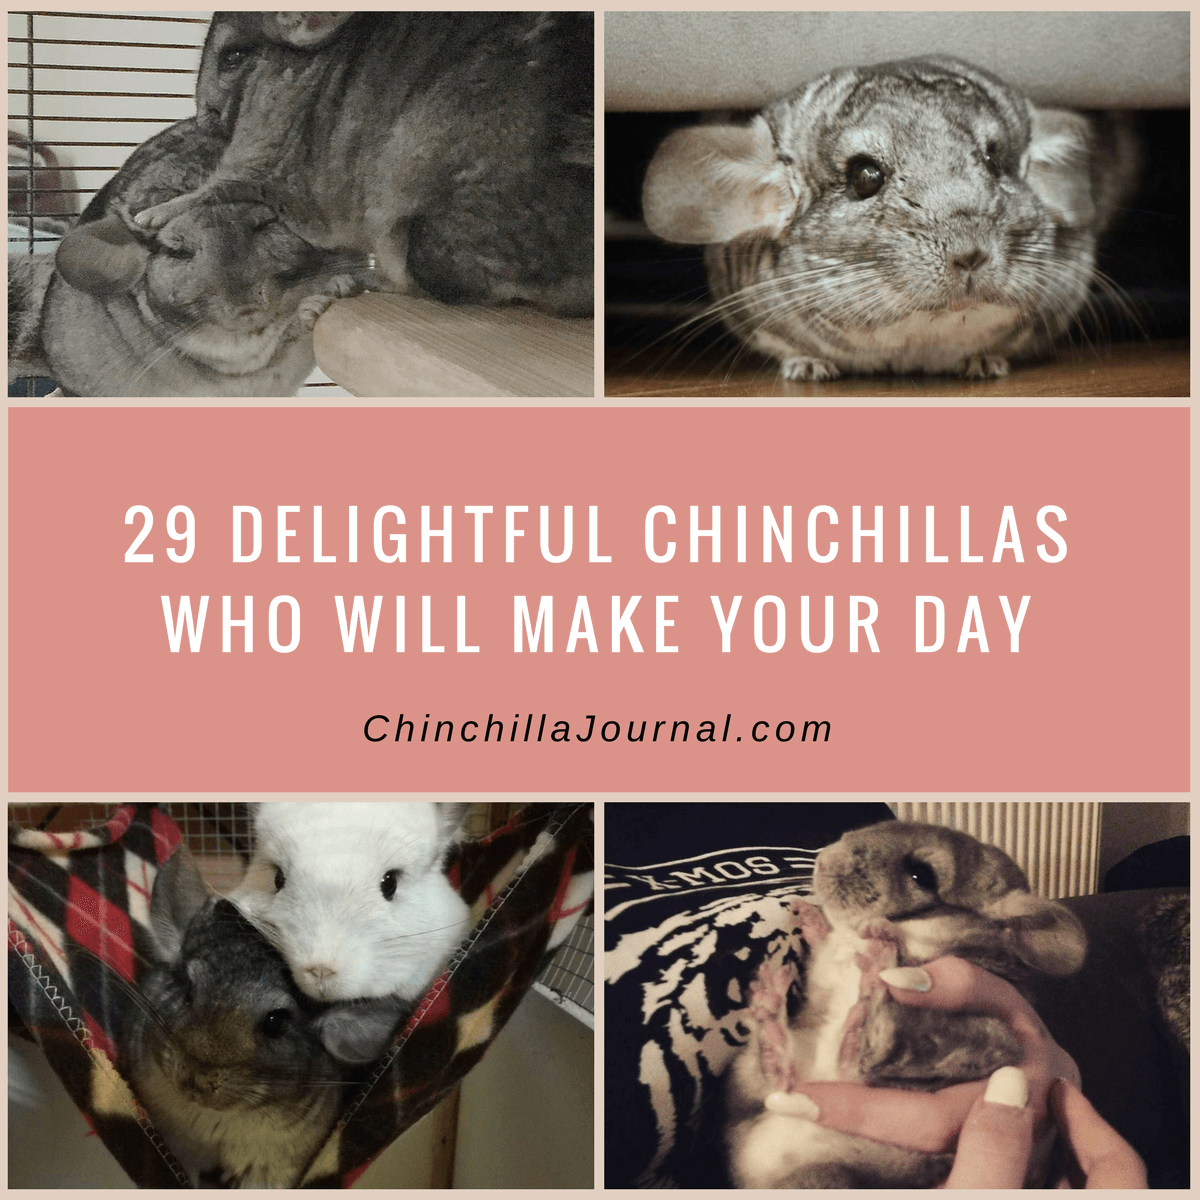 29 Delightful Chinchillas Who Will Make Your Day